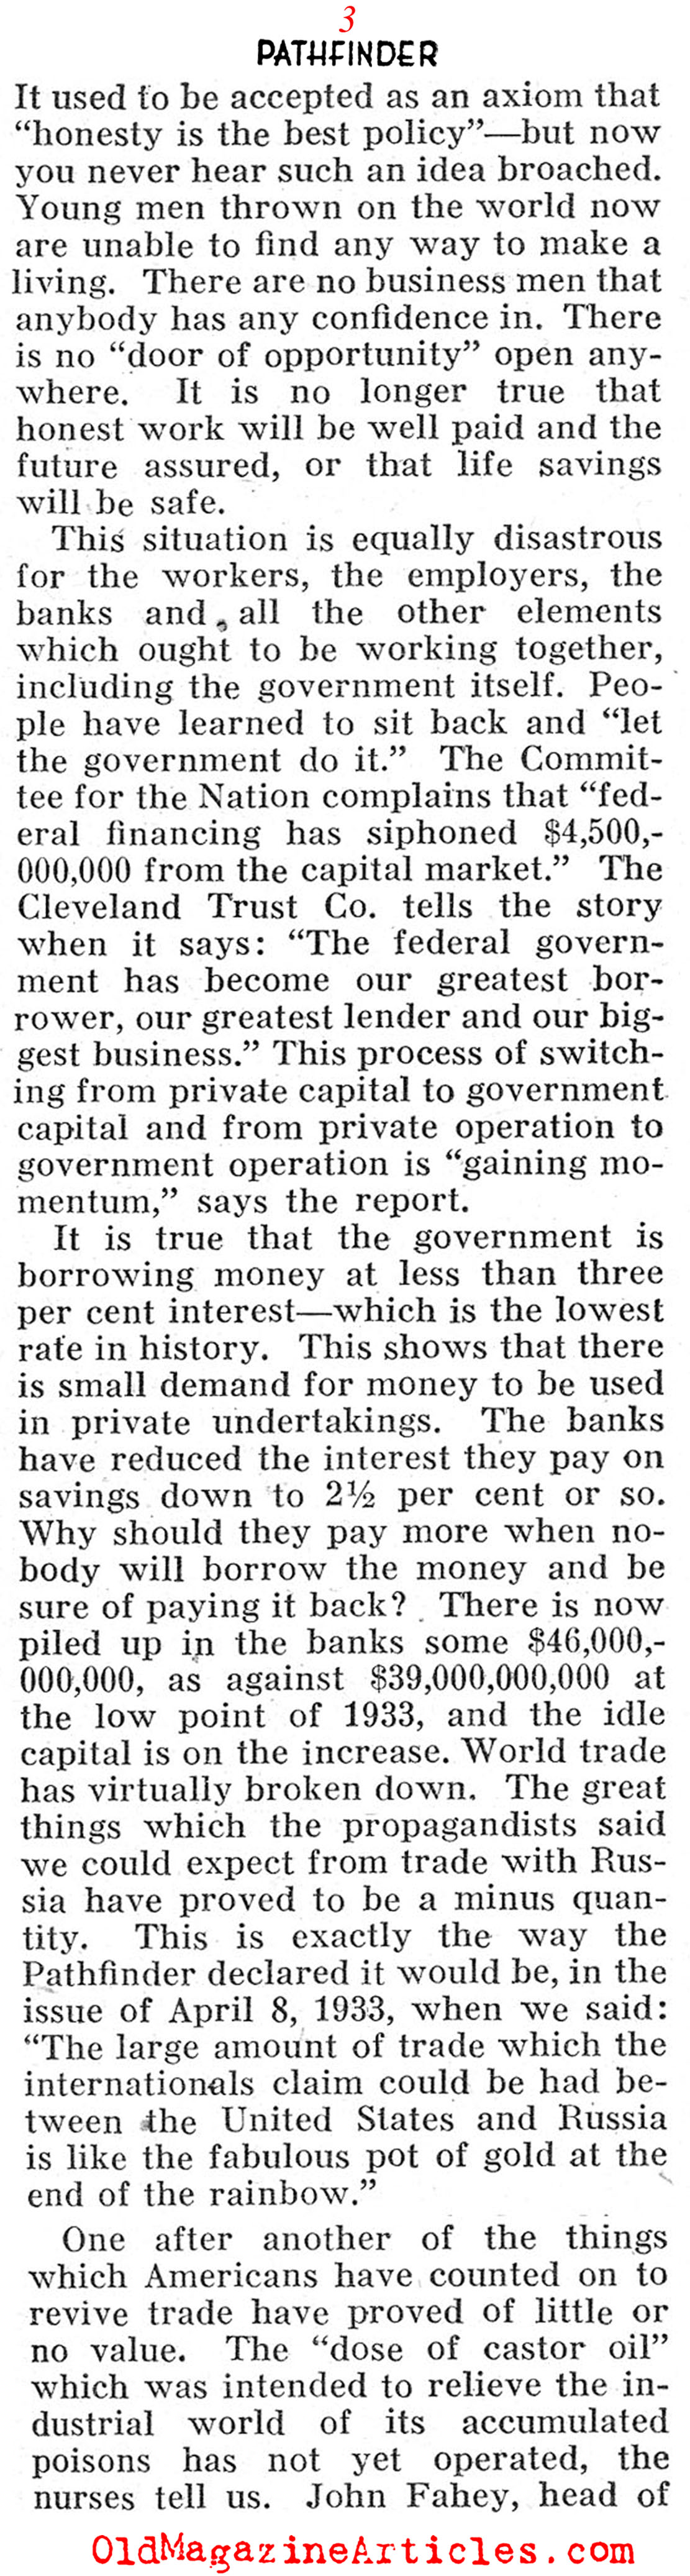 Dormant Capital (Pathfinder Magazine, 1934)